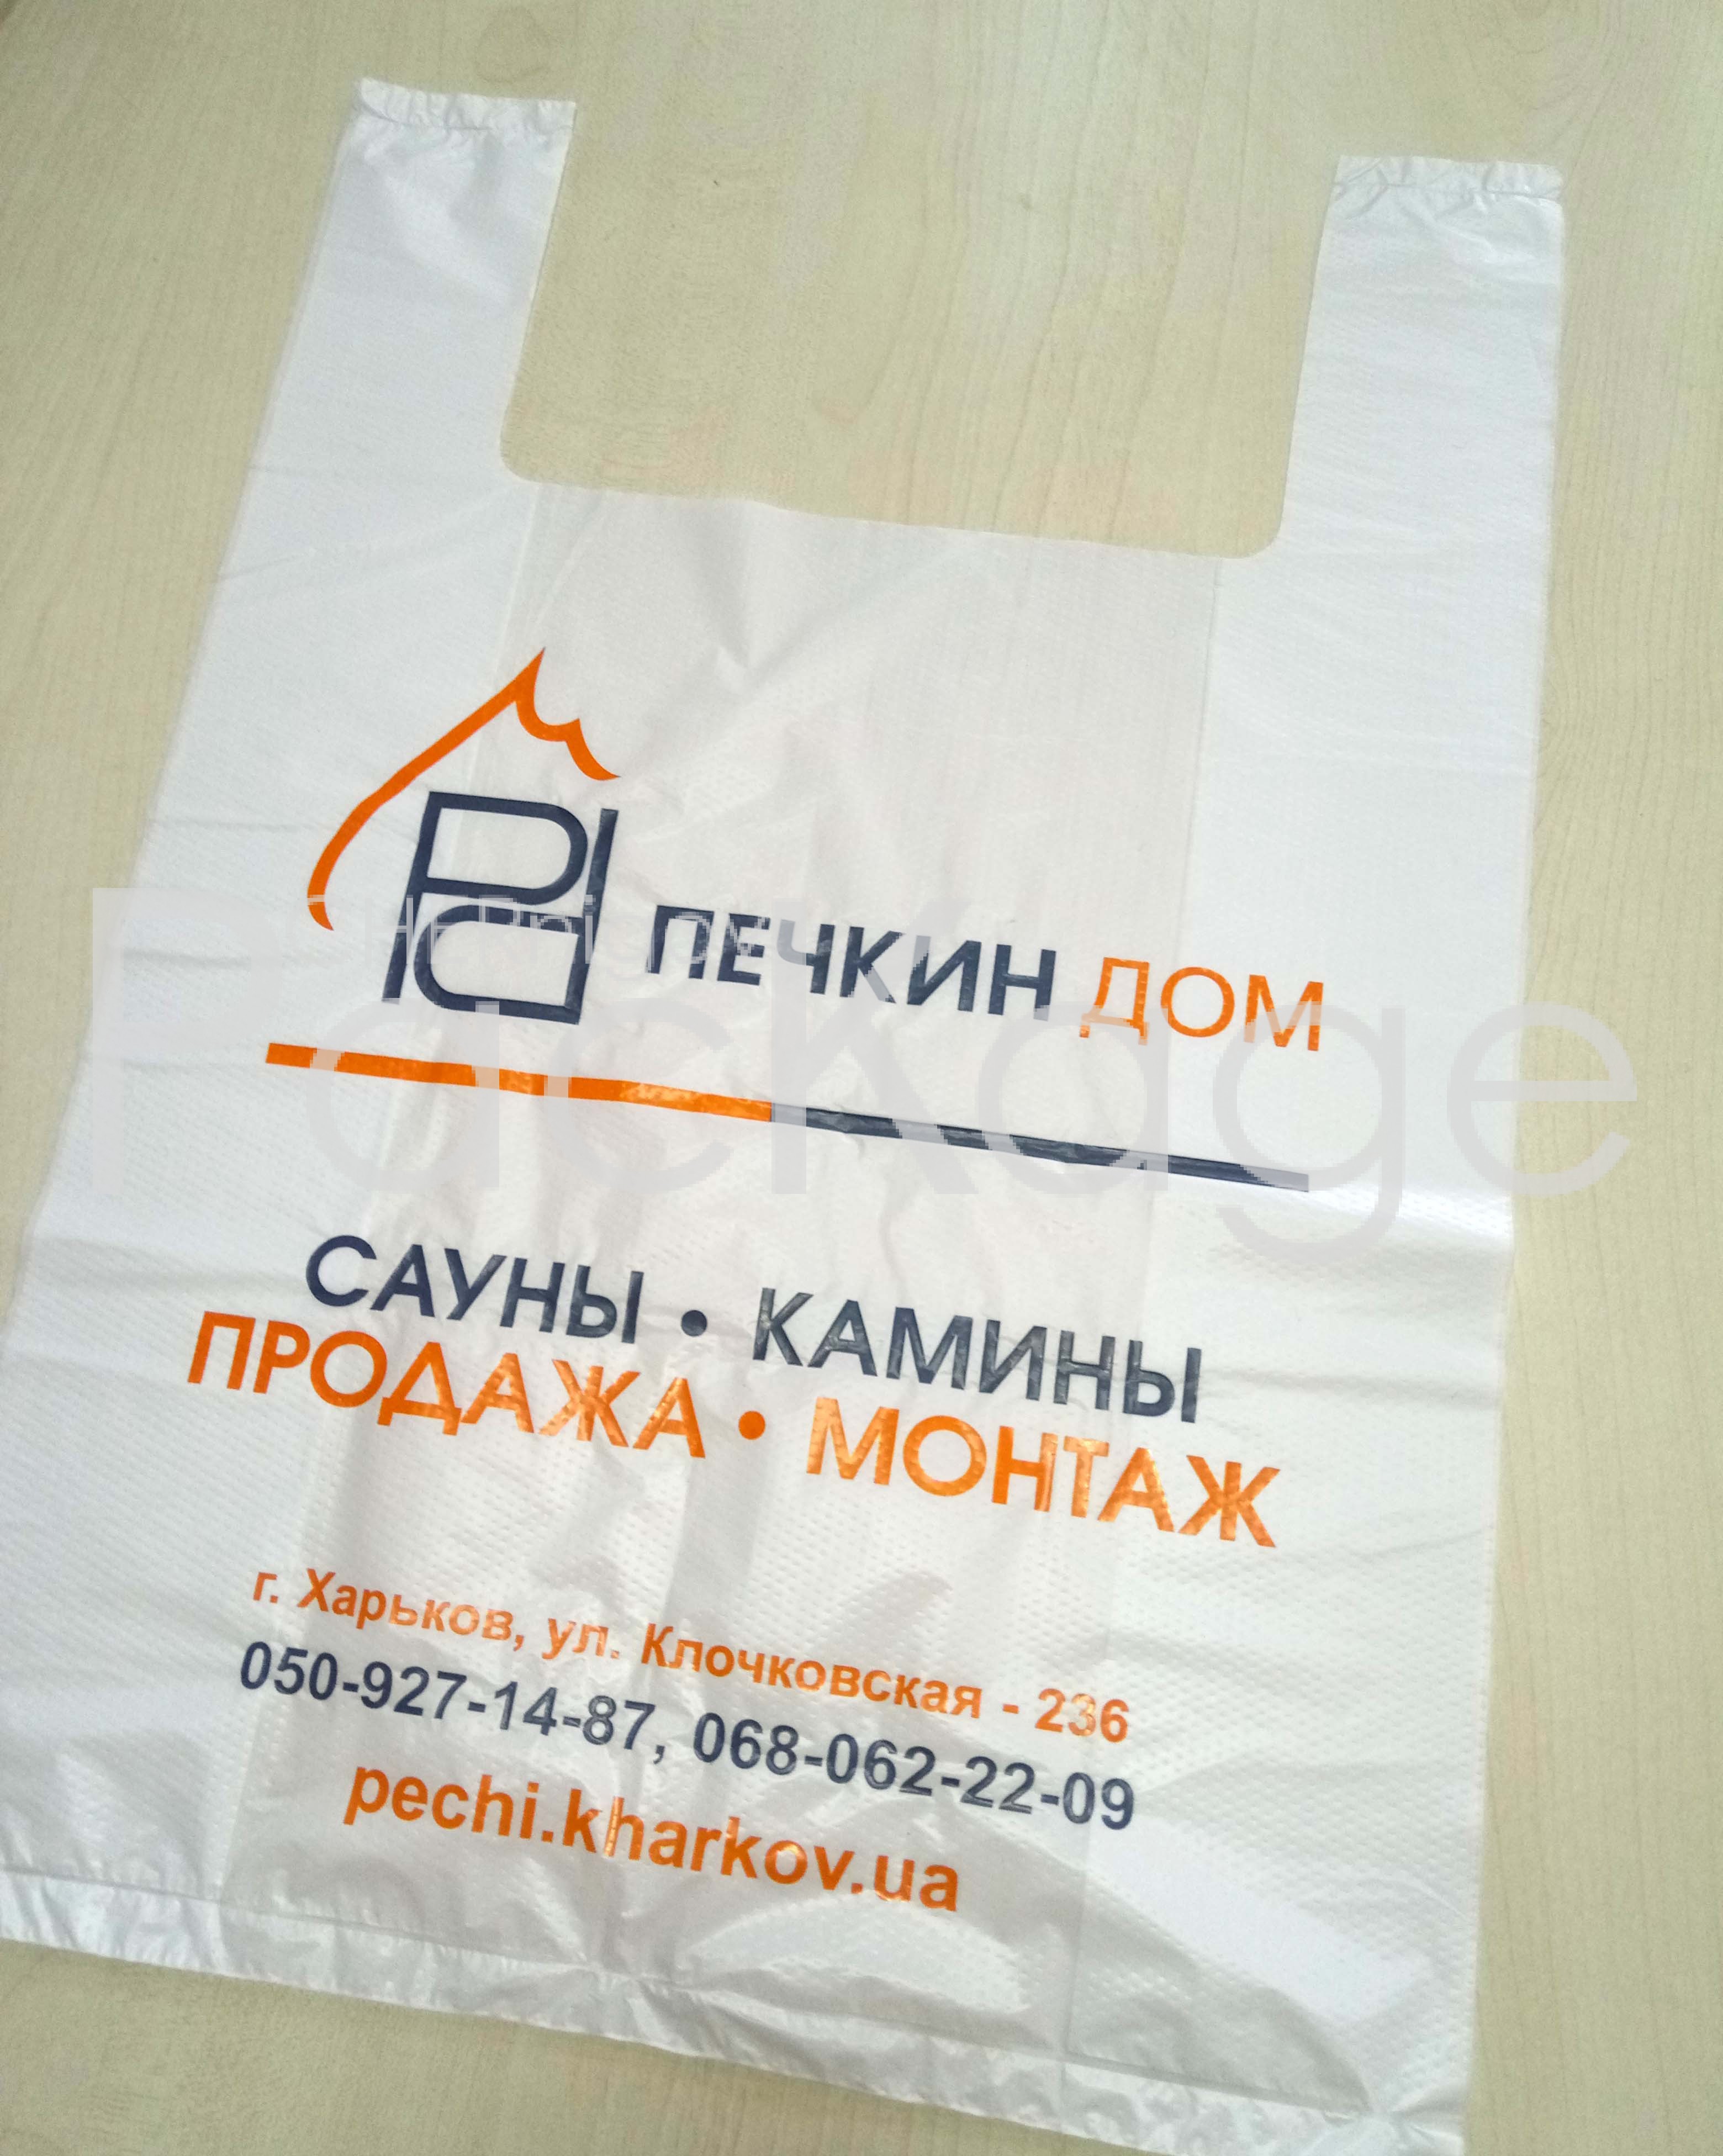 Грузоподъемность пакета “майка” Chernigov Package - Фото P70310-104429